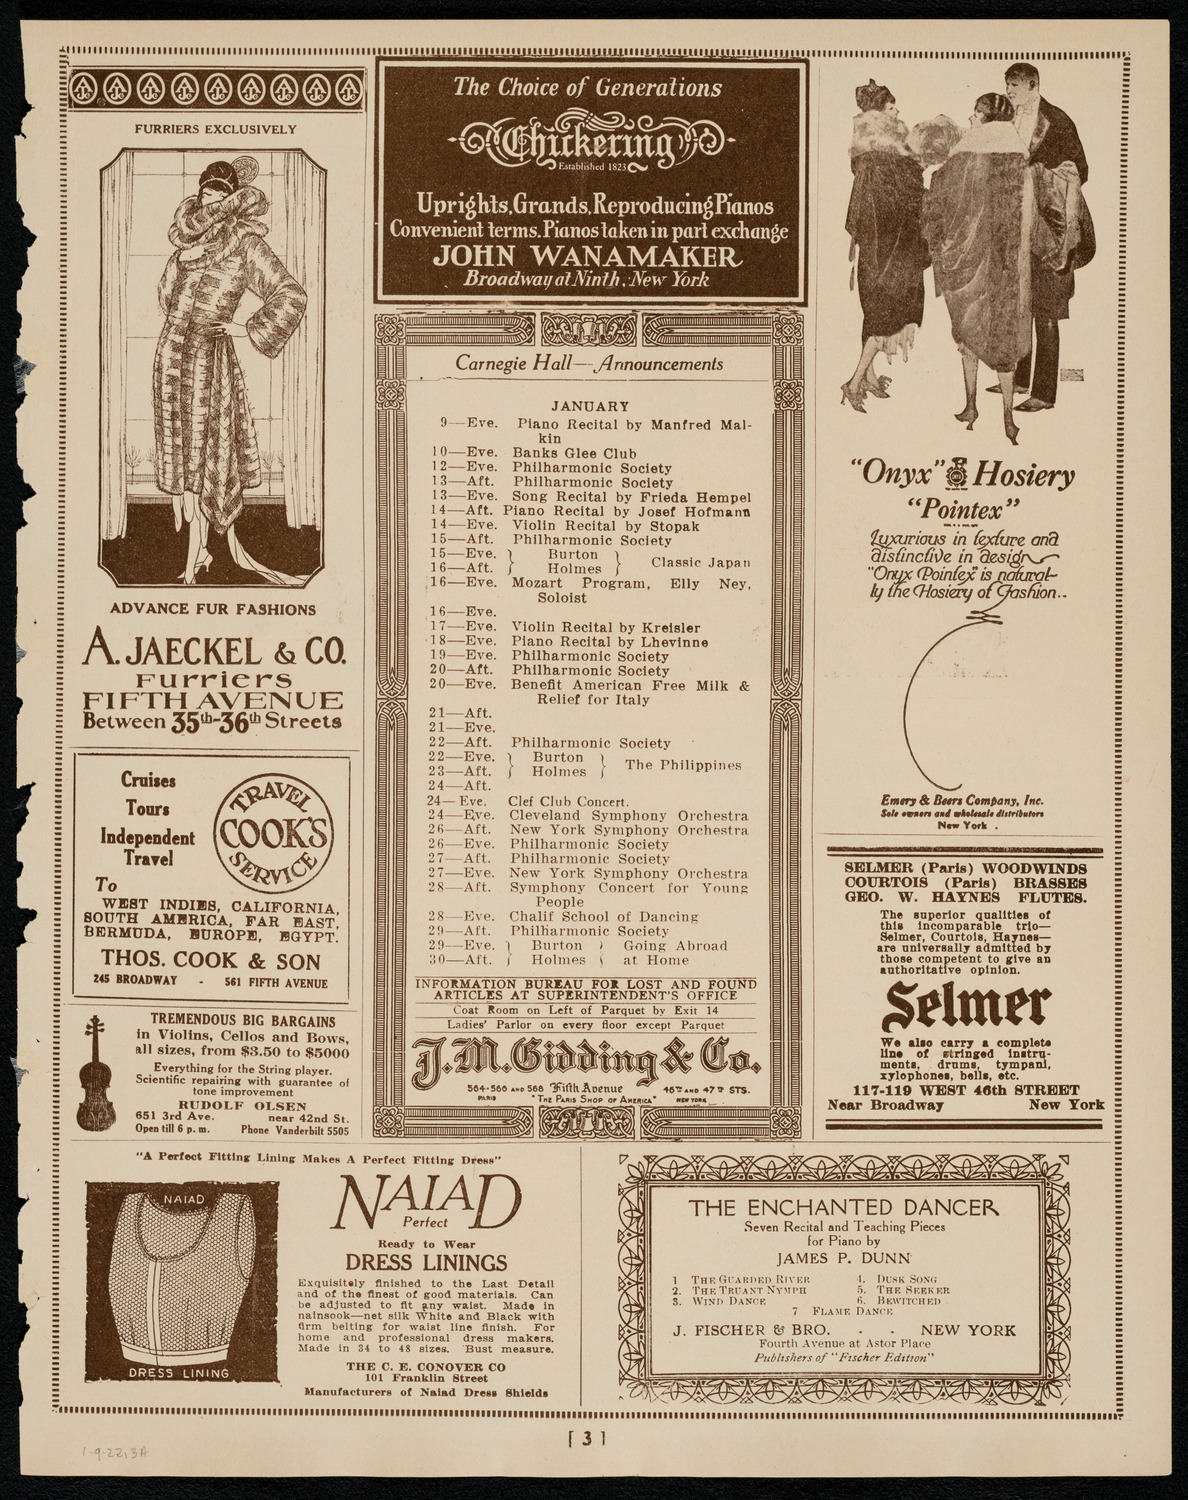 Burton Holmes Travelogue: Mexico, January 9, 1922, program page 3